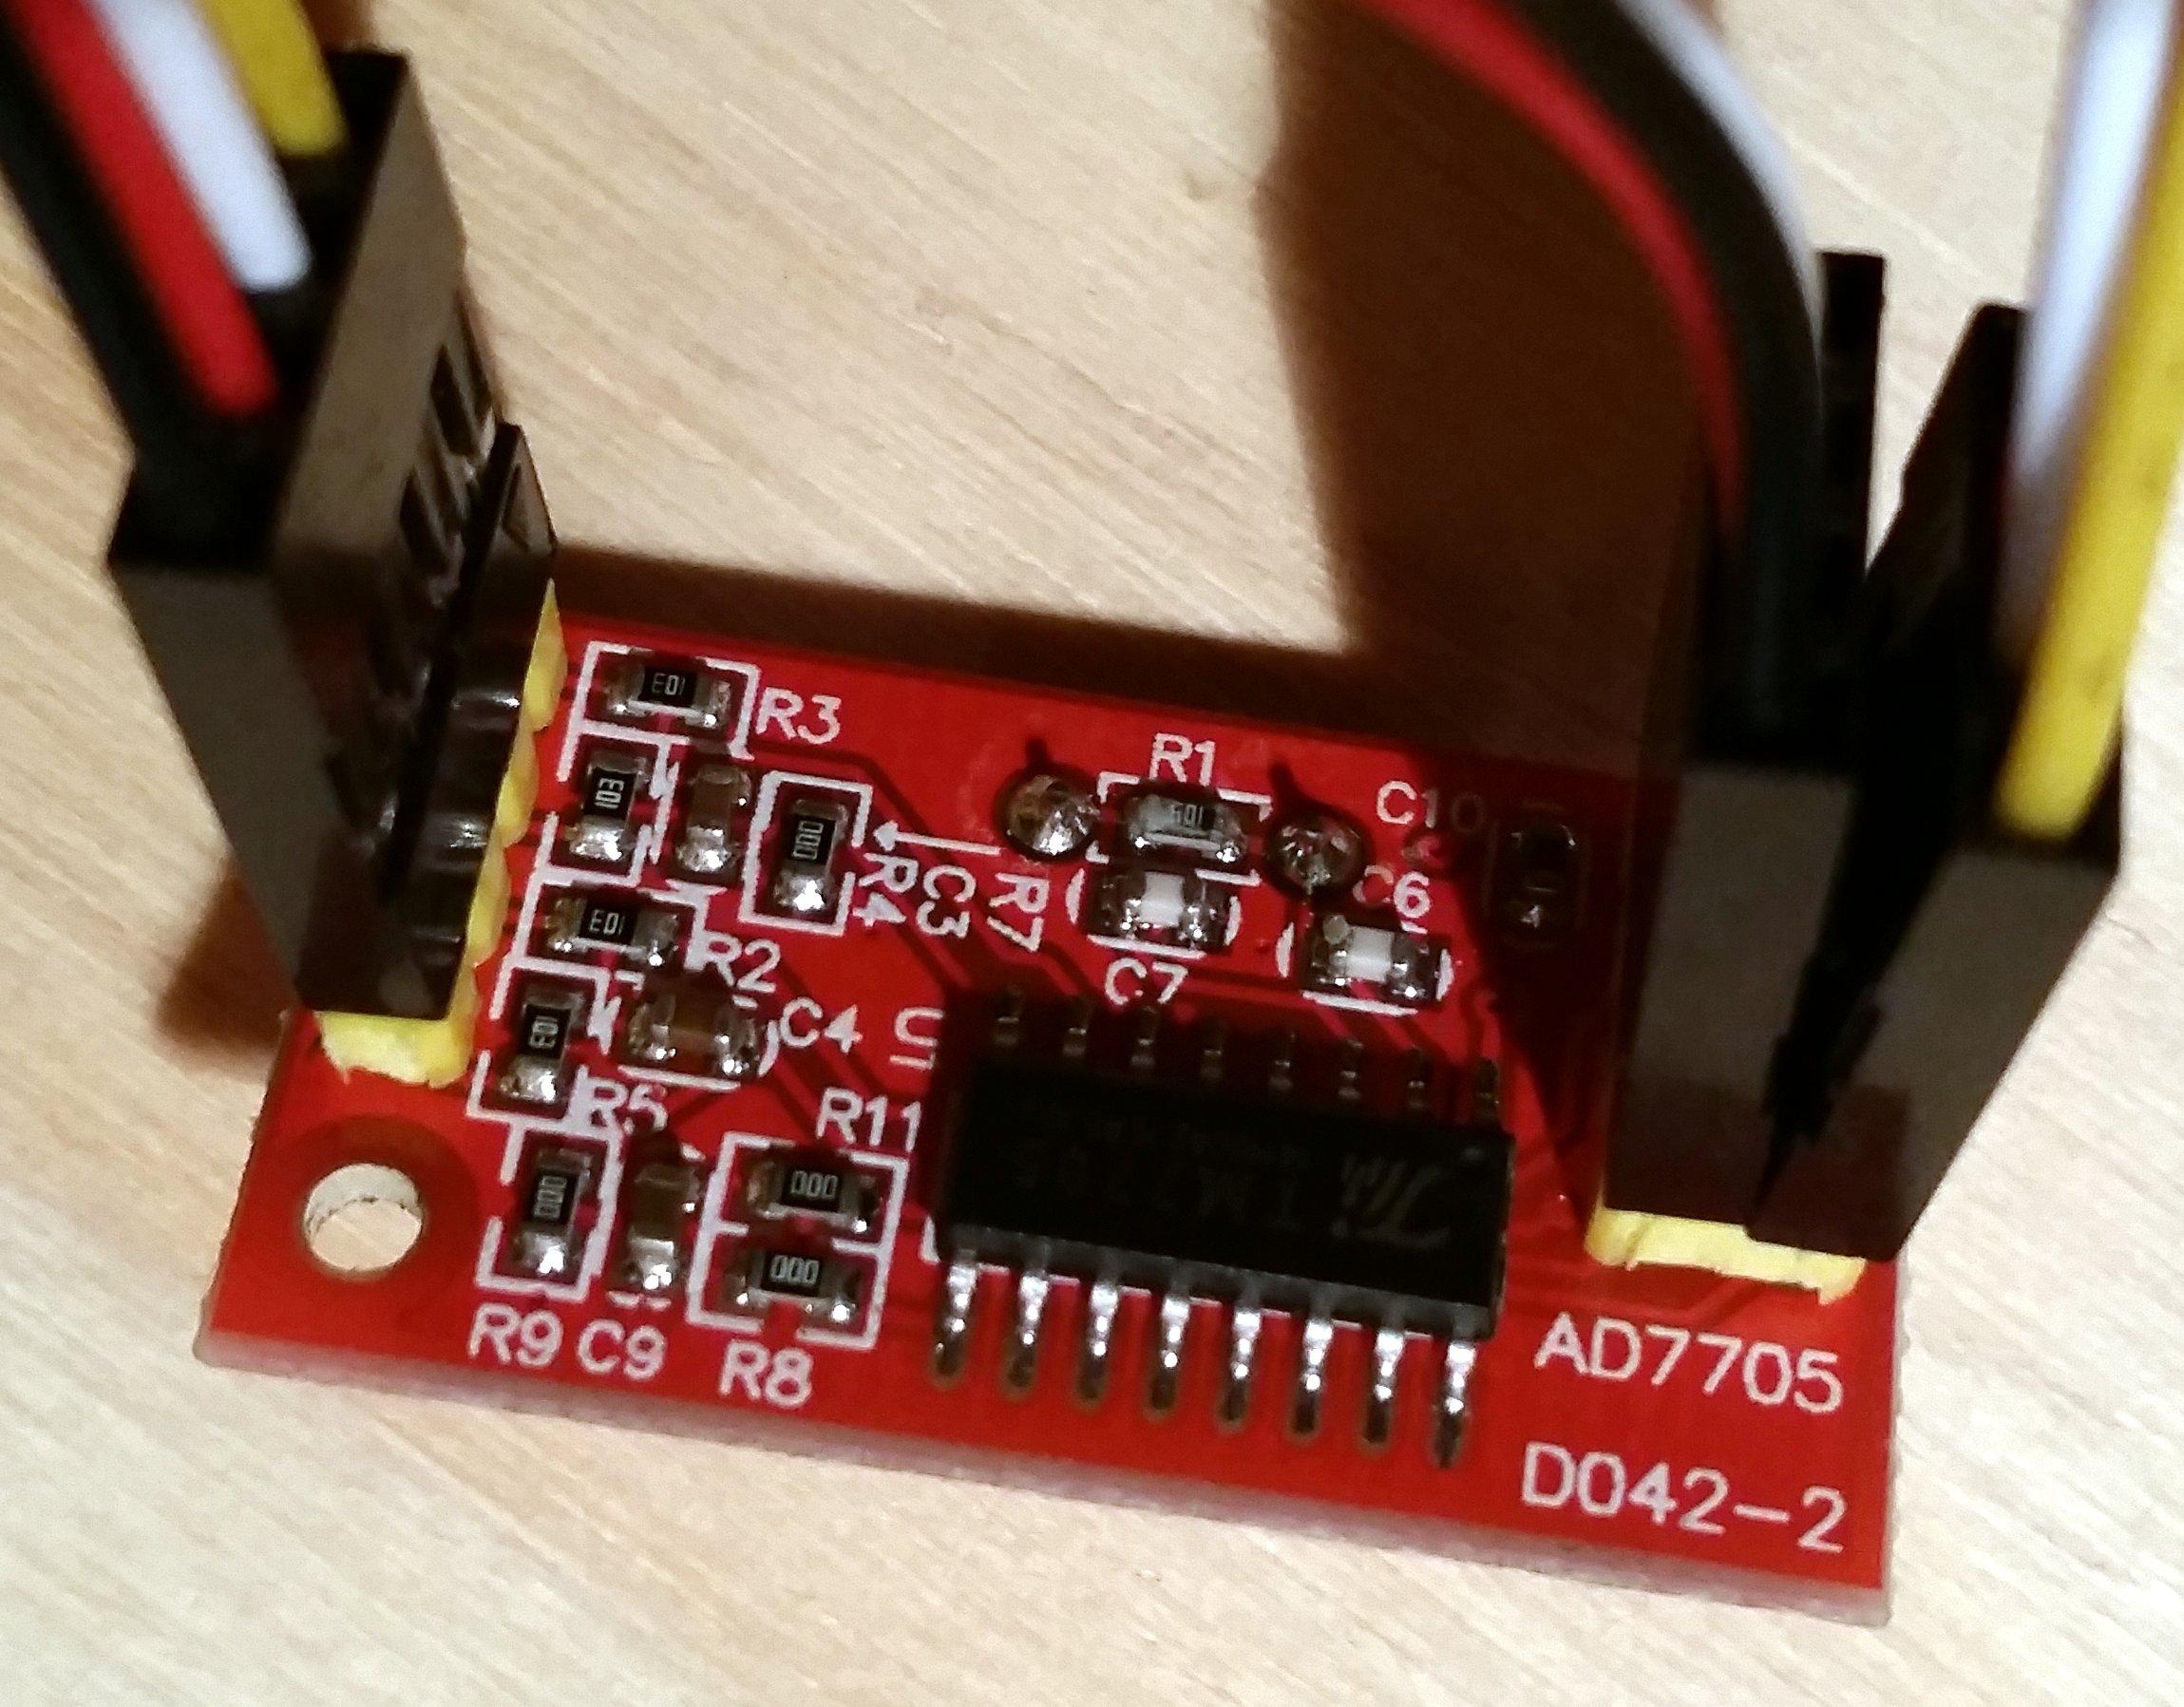 An AD7705 16-Bit Bi-Polar Analog to Digital Converter